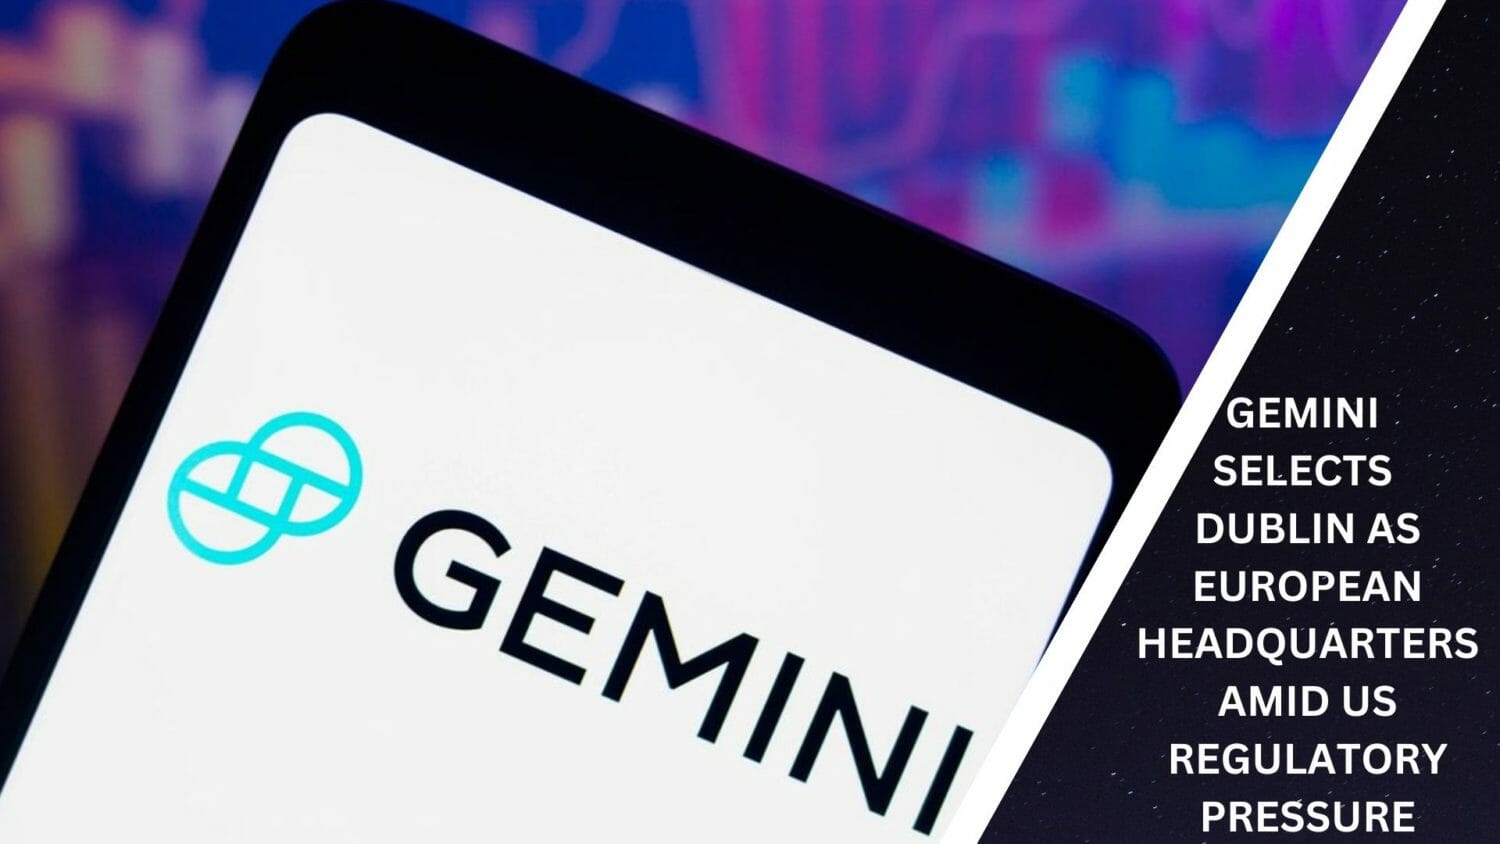 Gemini Selects Dublin As European Headquarters Amid Us Regulatory Pressure